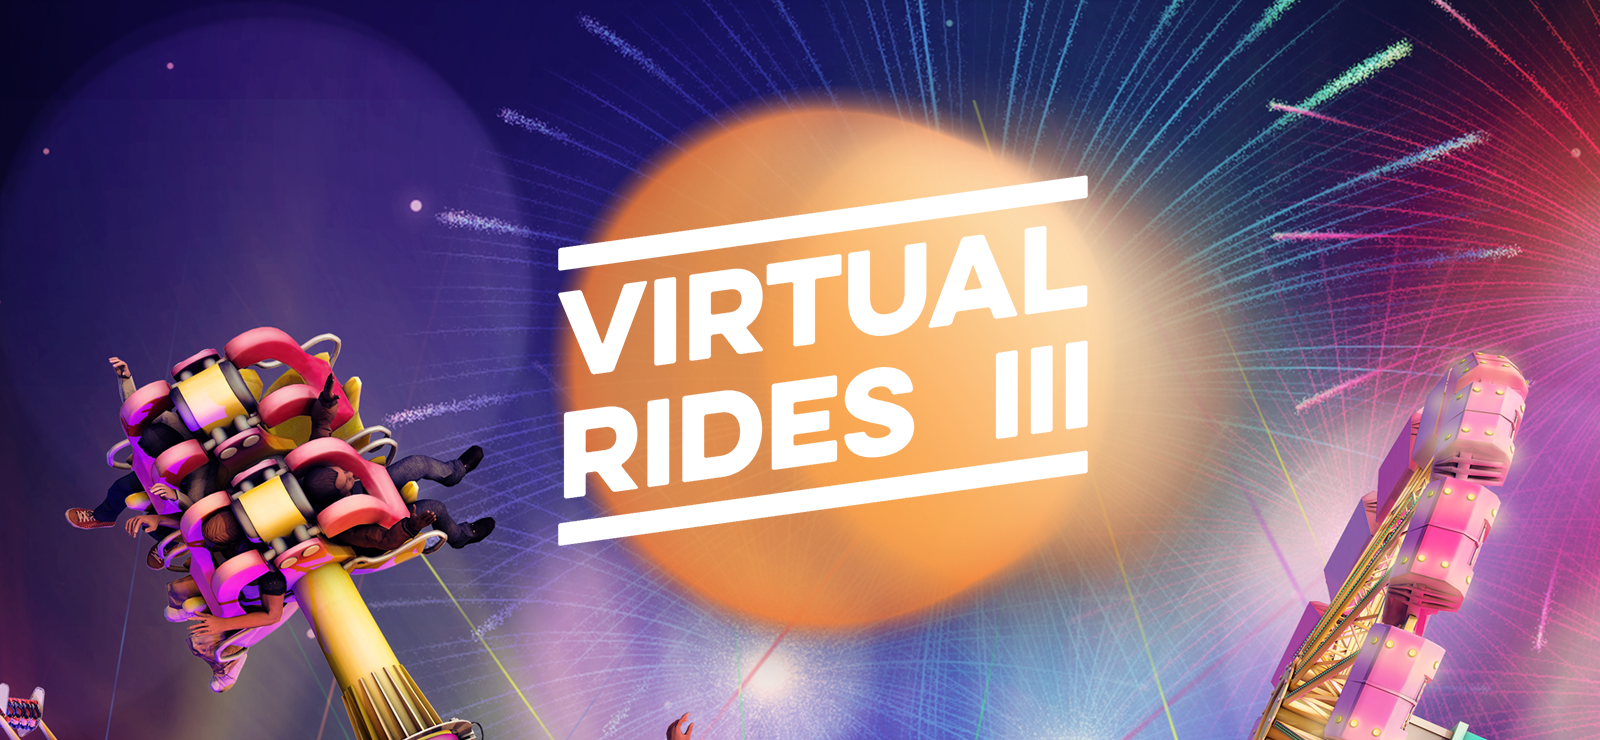 Virtual Rides 3 - Funfair Simulator